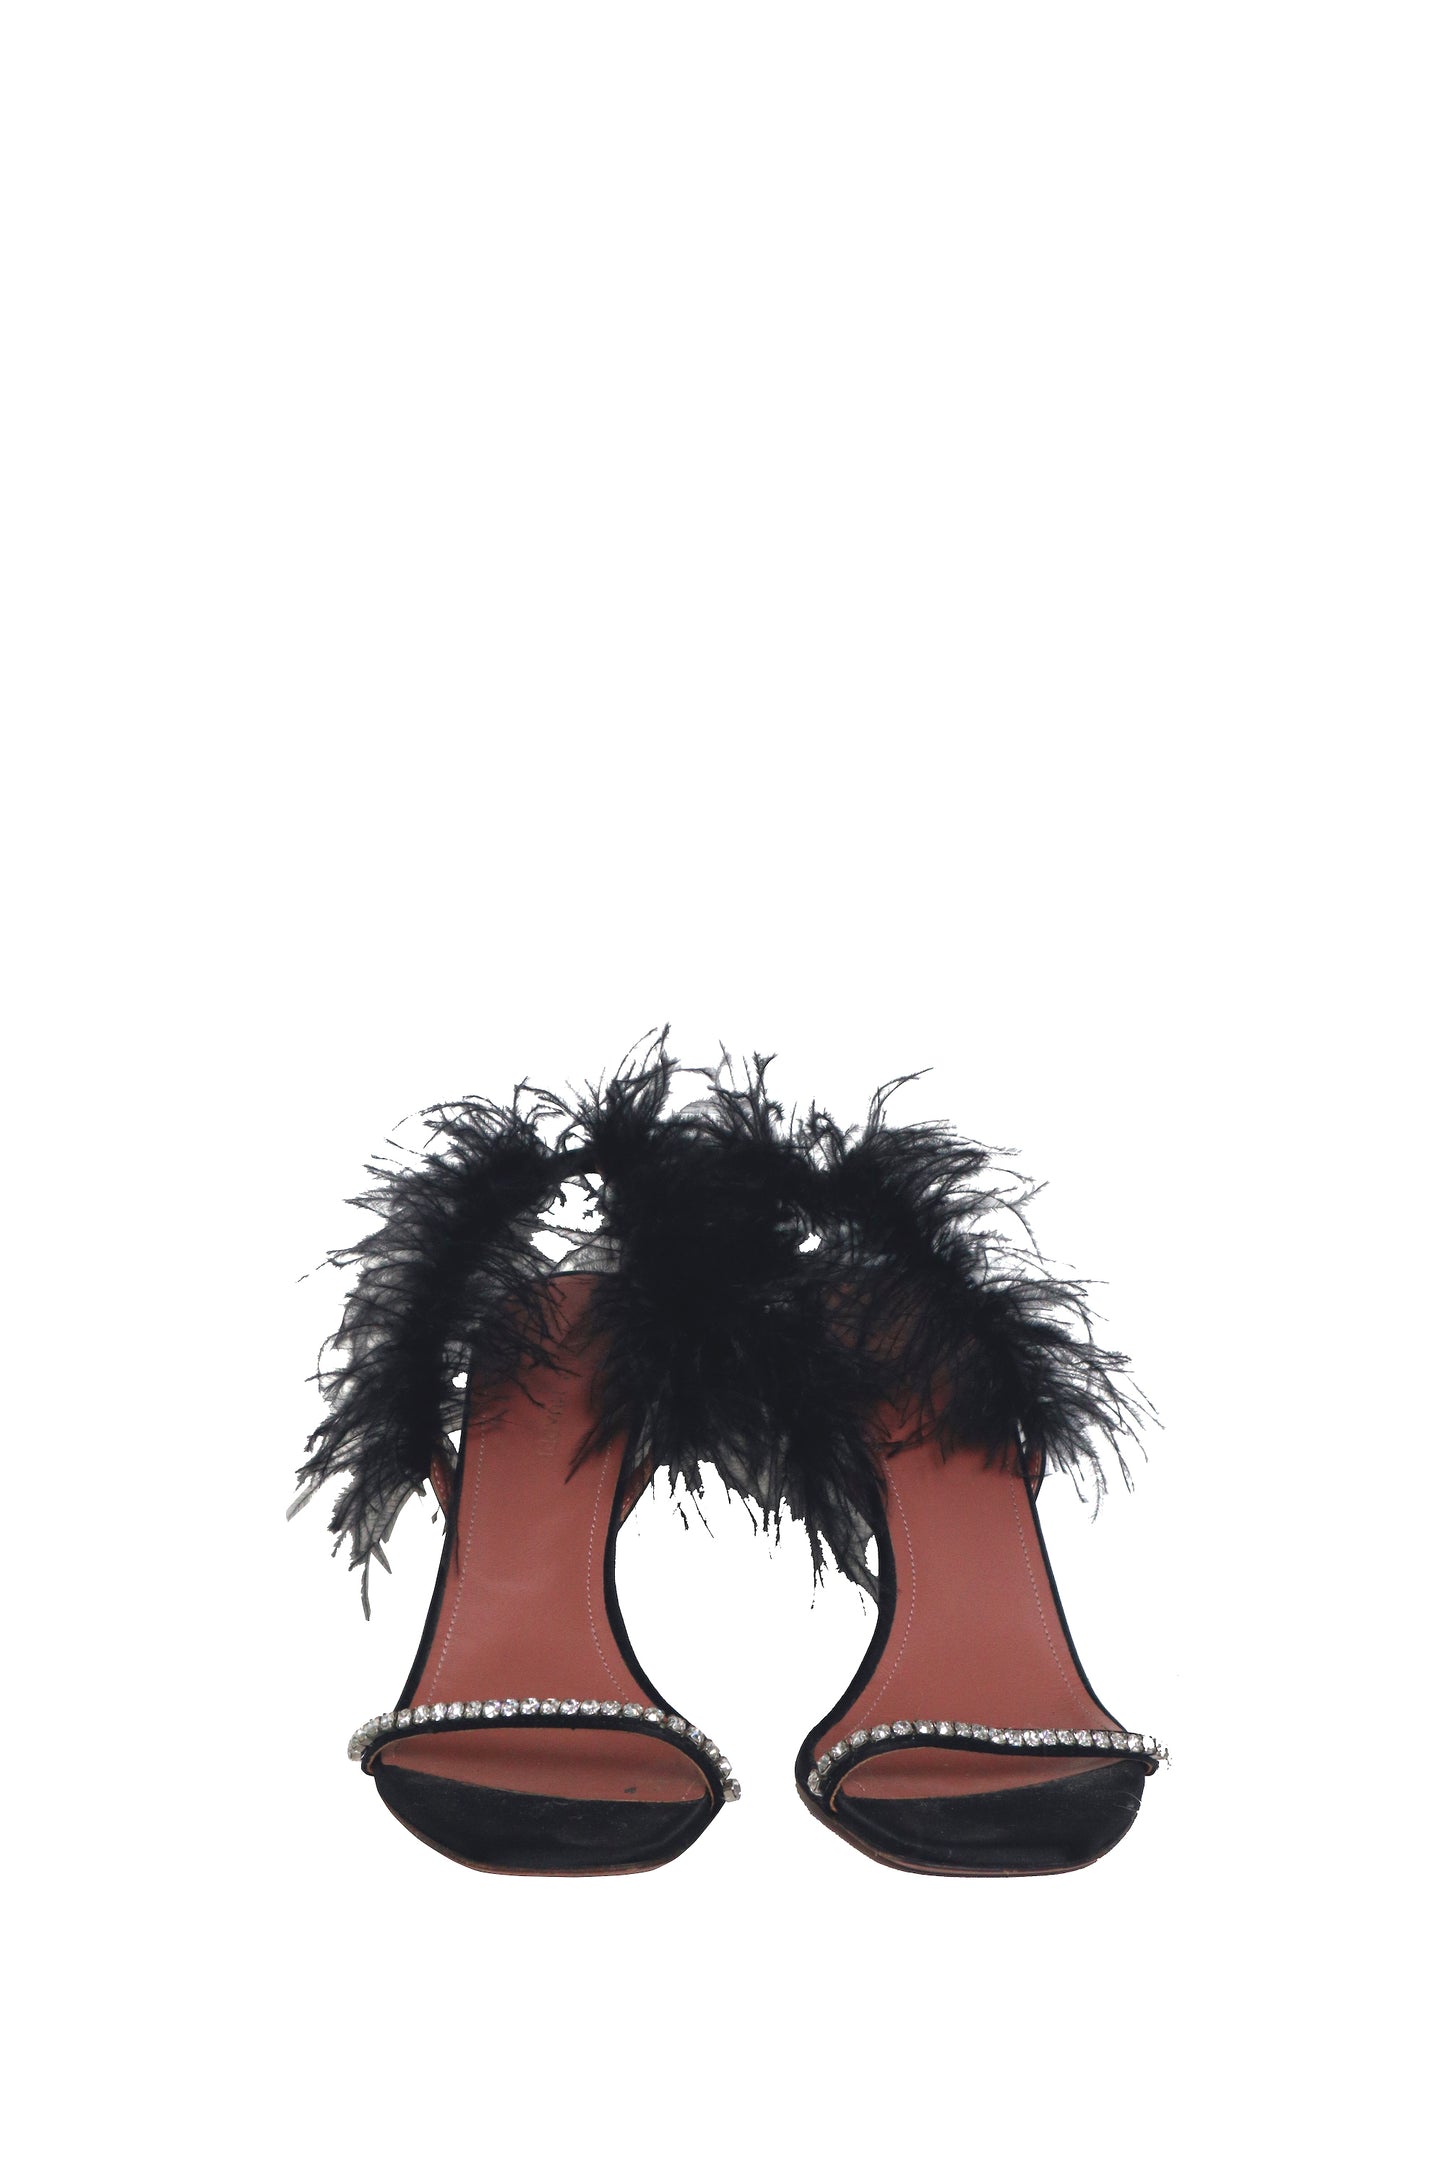 AMINA MUADDI - Black Feather Crystal Heels - Size 37.5